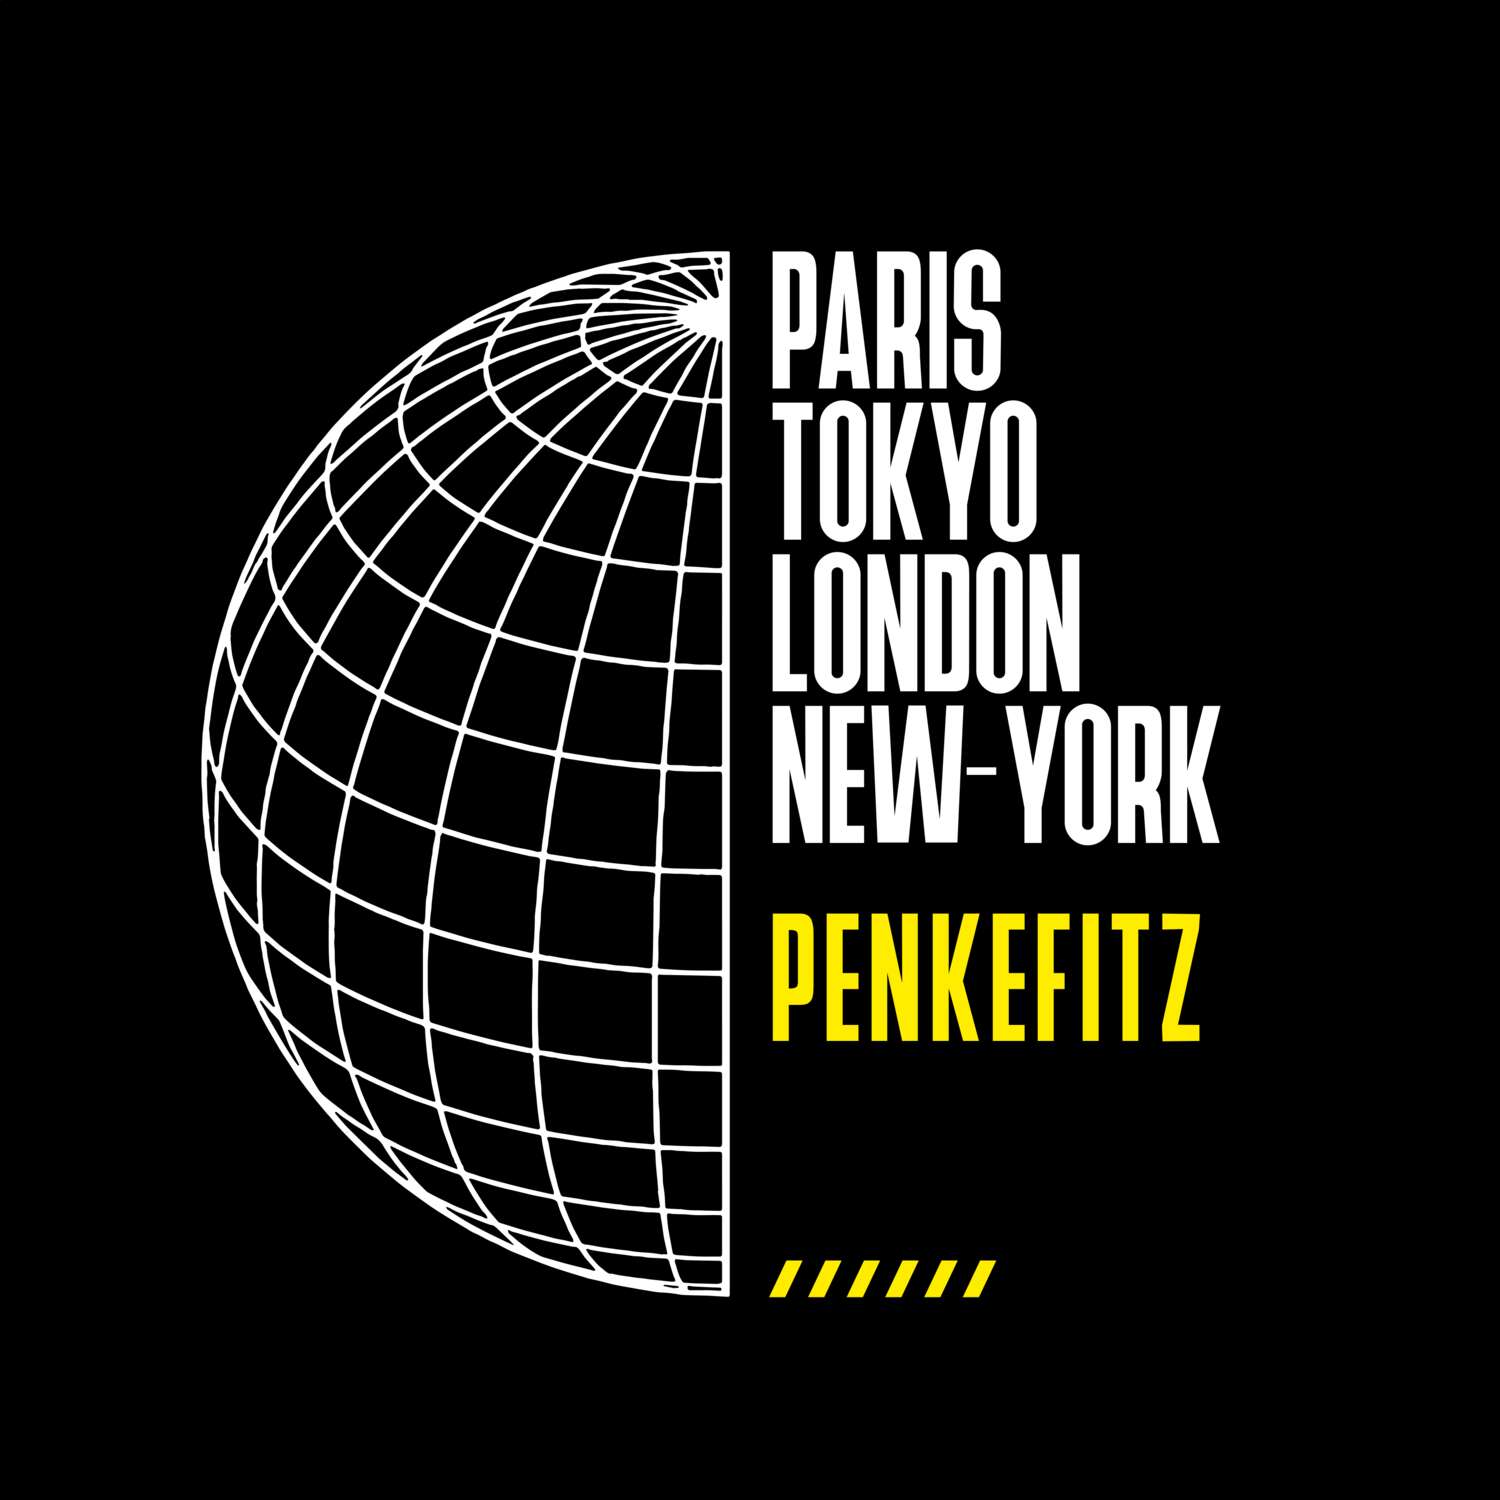 Penkefitz T-Shirt »Paris Tokyo London«